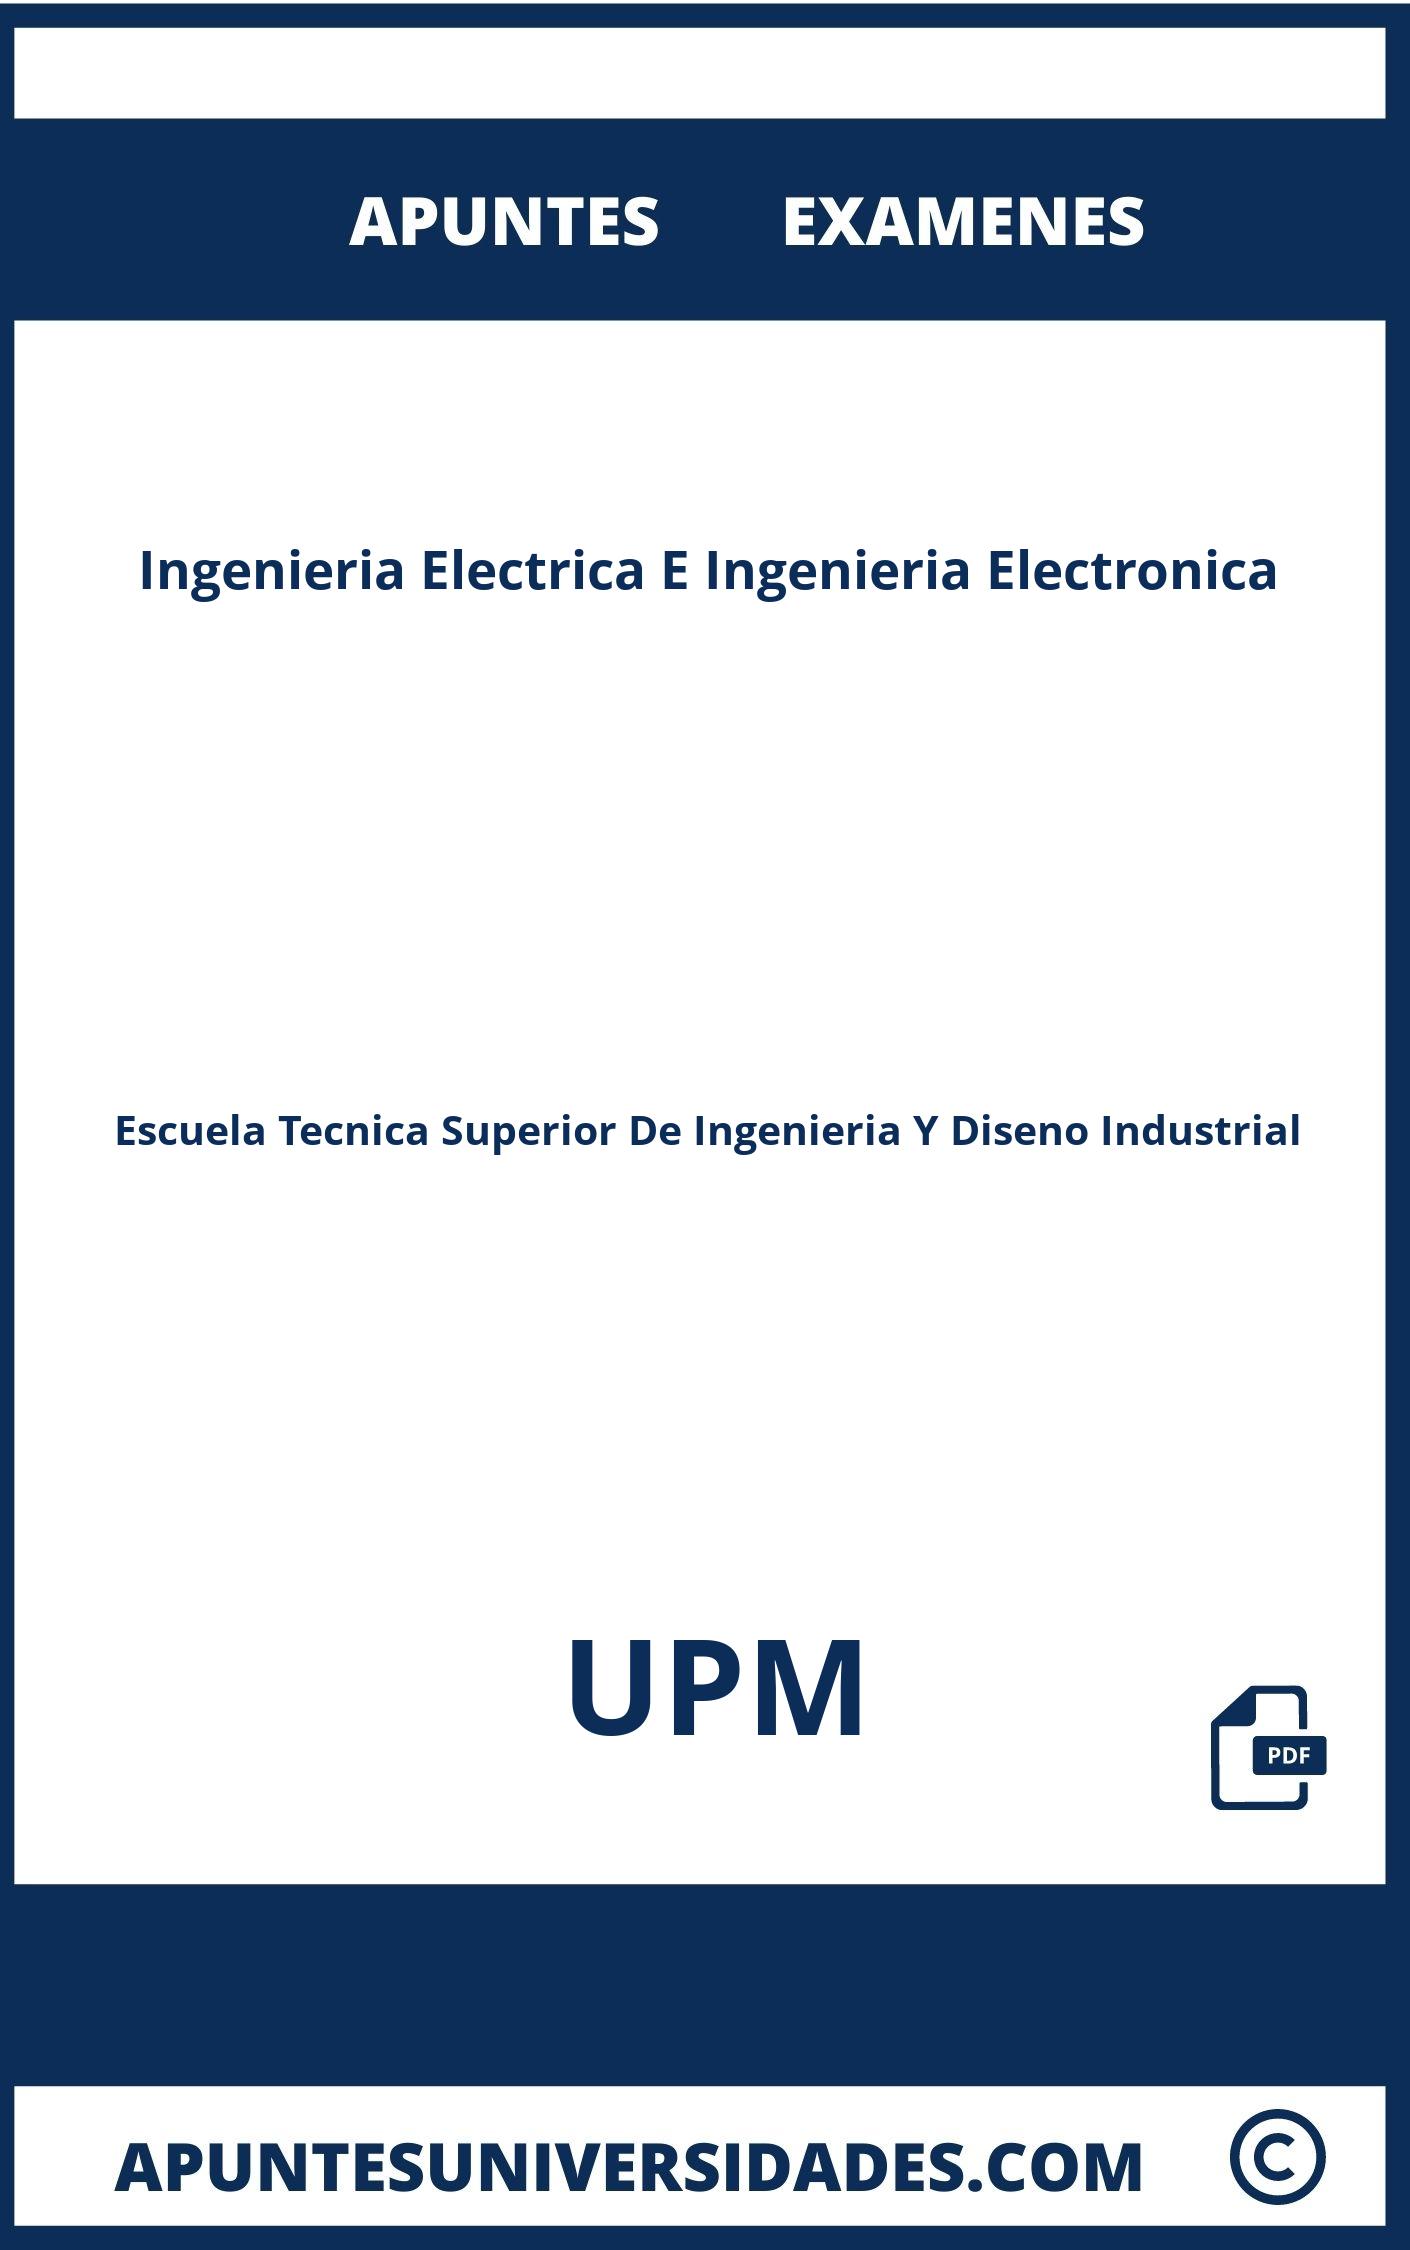 Apuntes y Examenes Ingenieria Electrica E Ingenieria Electronica UPM